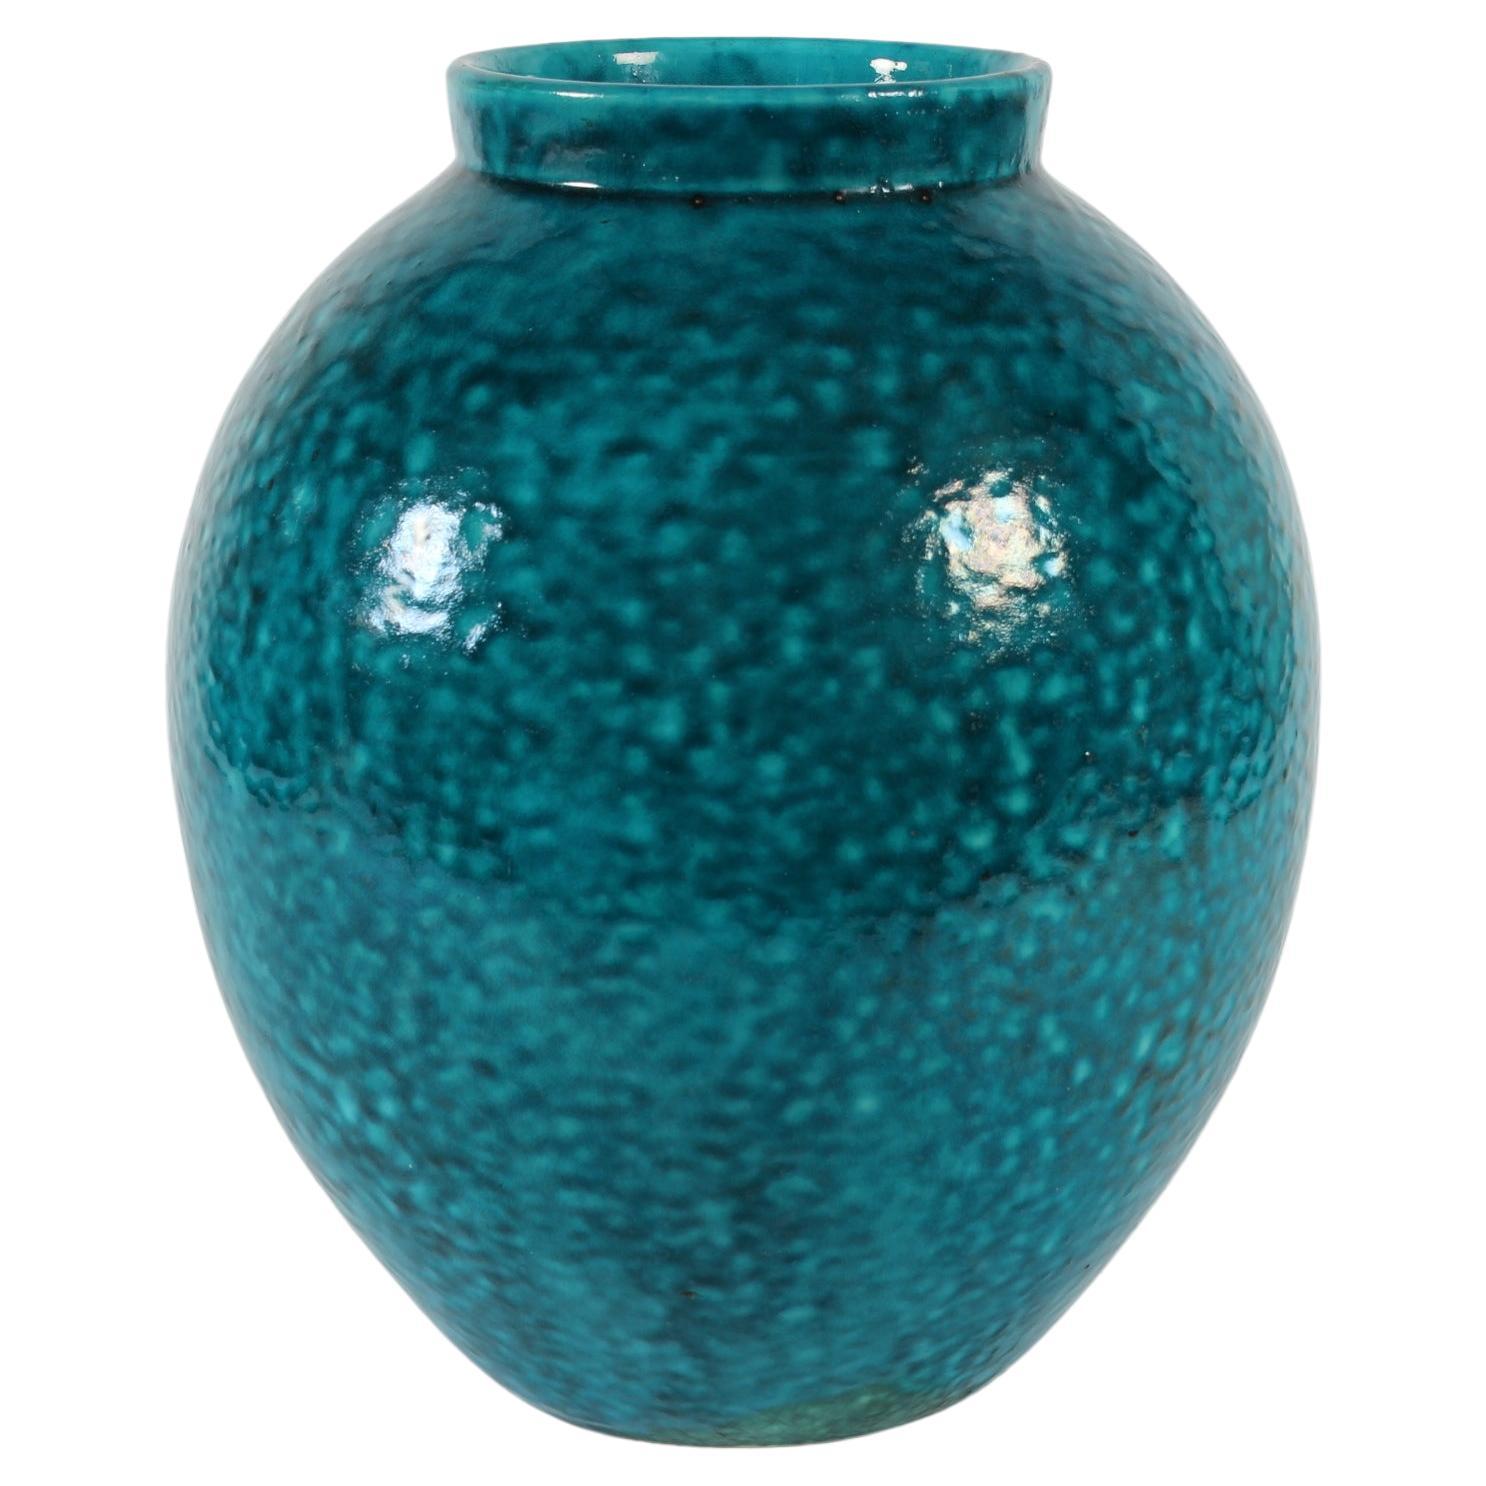 Herman A. Kähler Art Deco Floor Vase Speckled Turquoise Glaze, HAK Denmark 1930